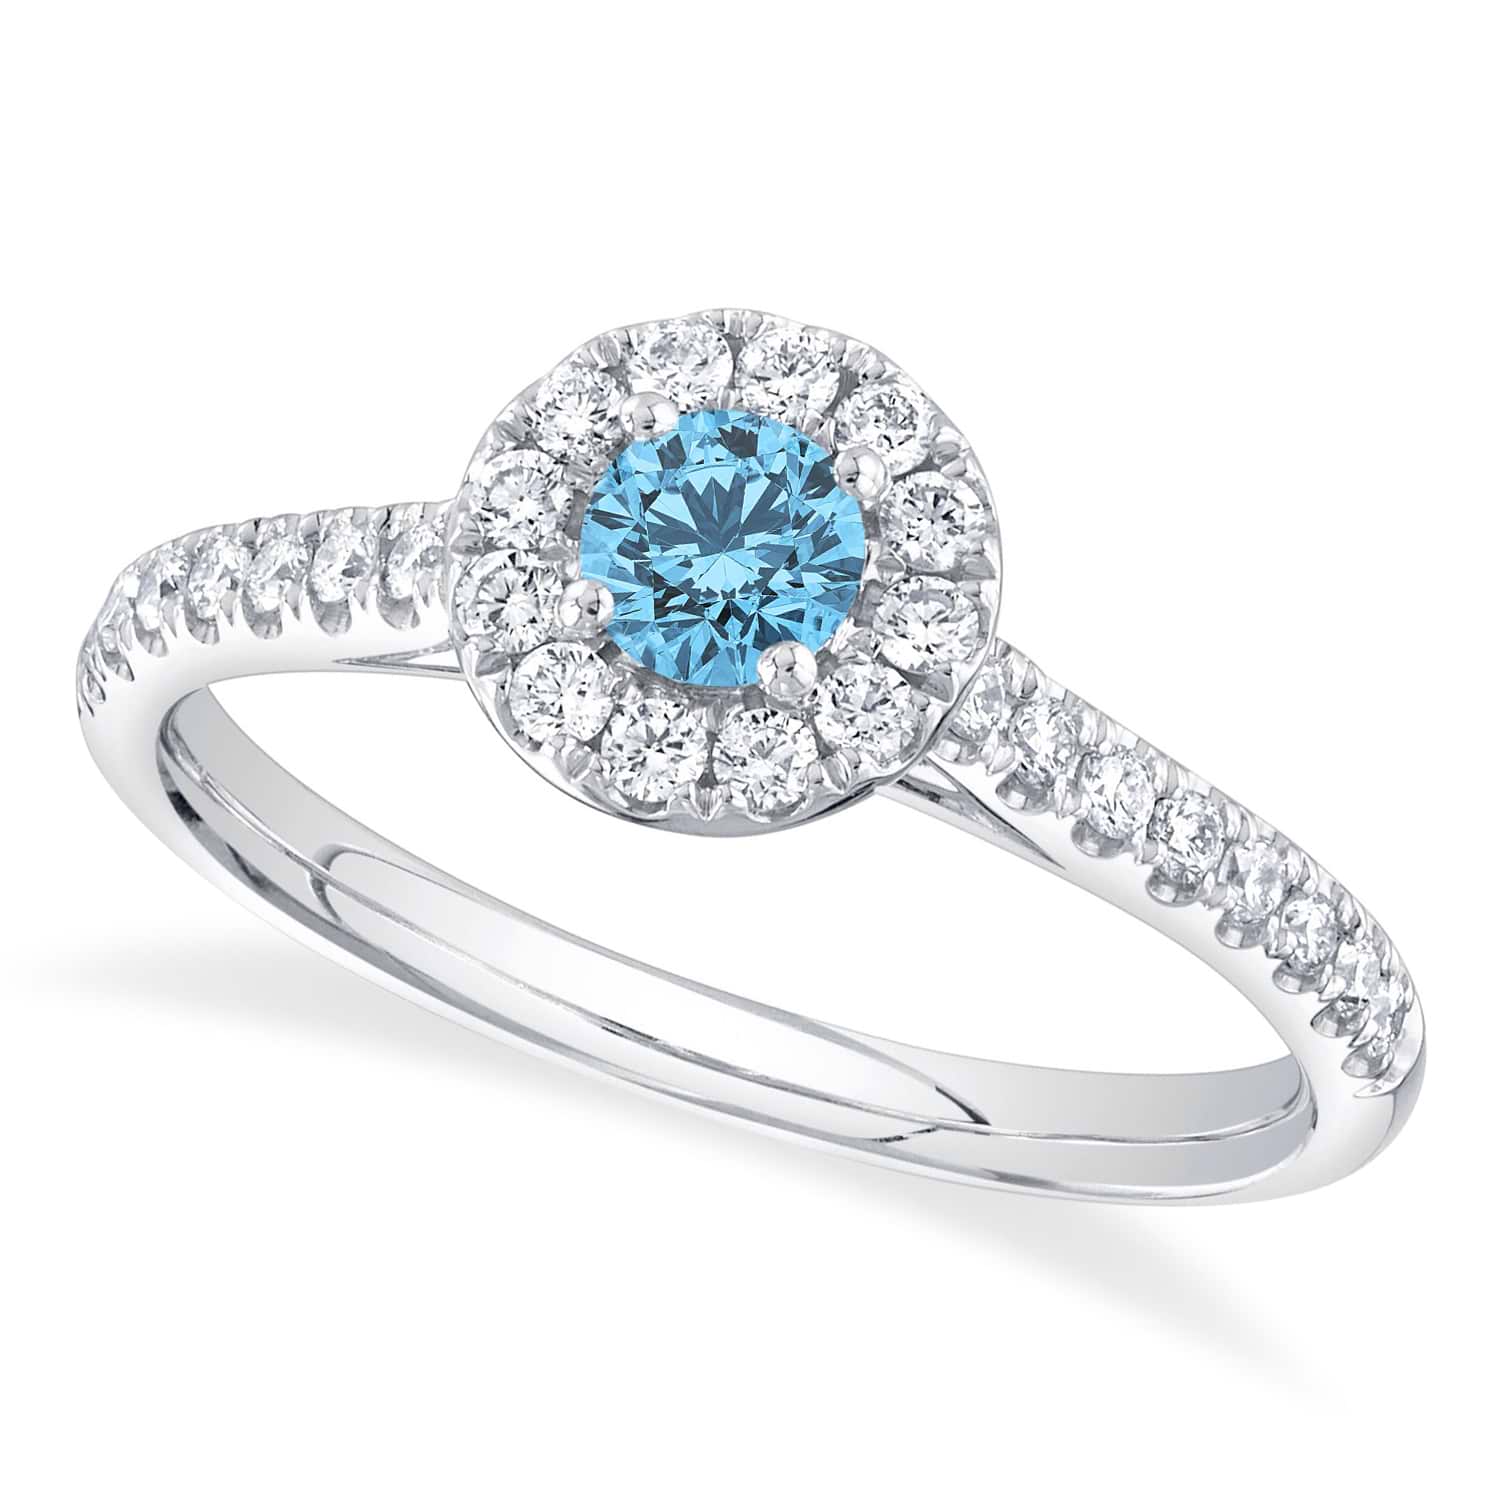 Round Blue Topaz Solitaire & Diamond Engagement Ring 14K White Gold (0.65ct)